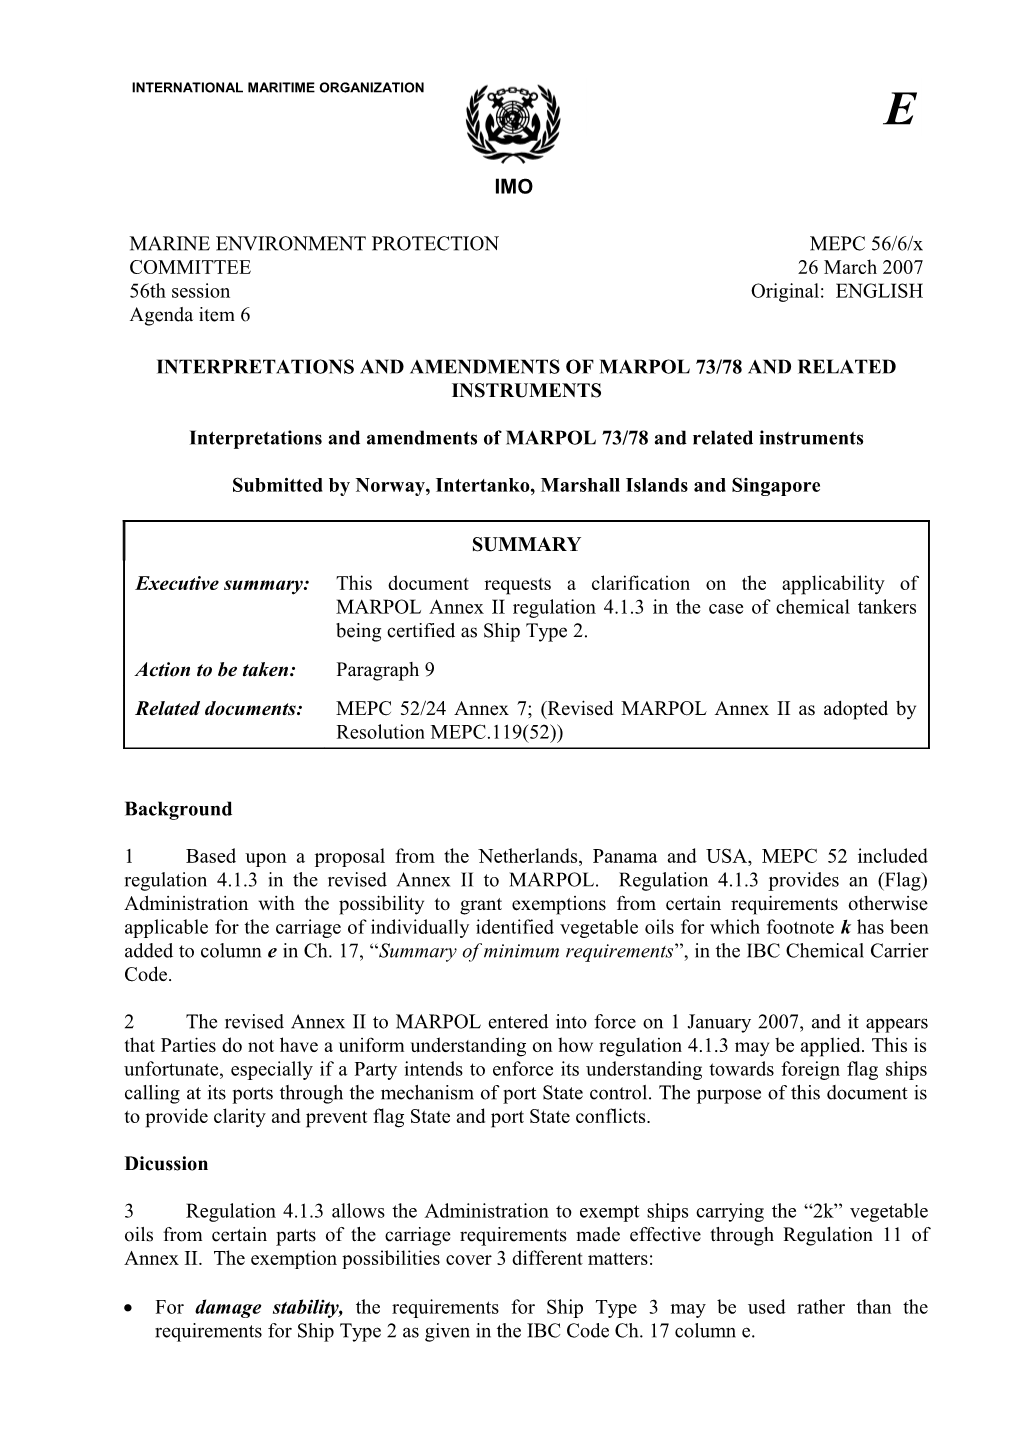 Interpretations and Amendments of Marpol 73/78 and Related Instruments